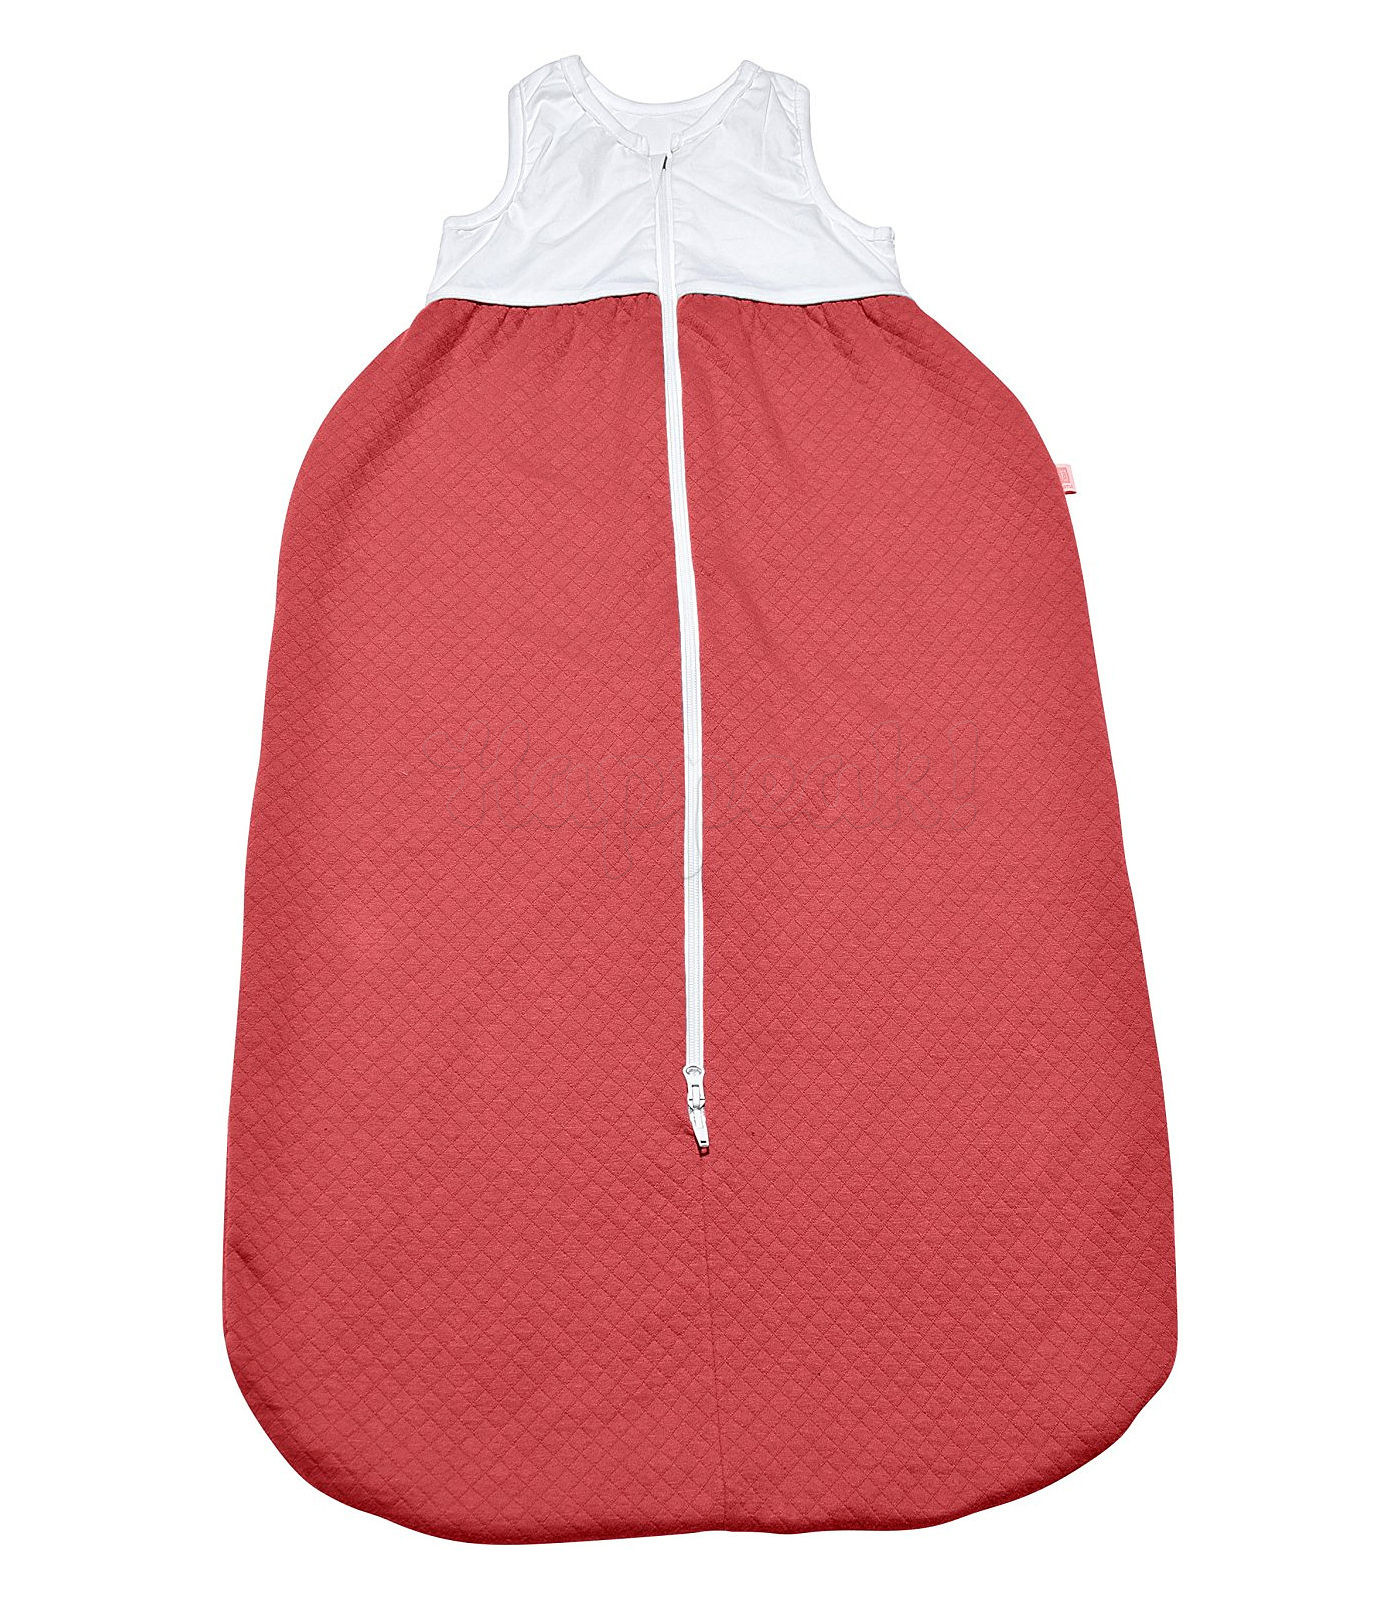 Cпальный мешок RED CASTLE CORAL 105 см